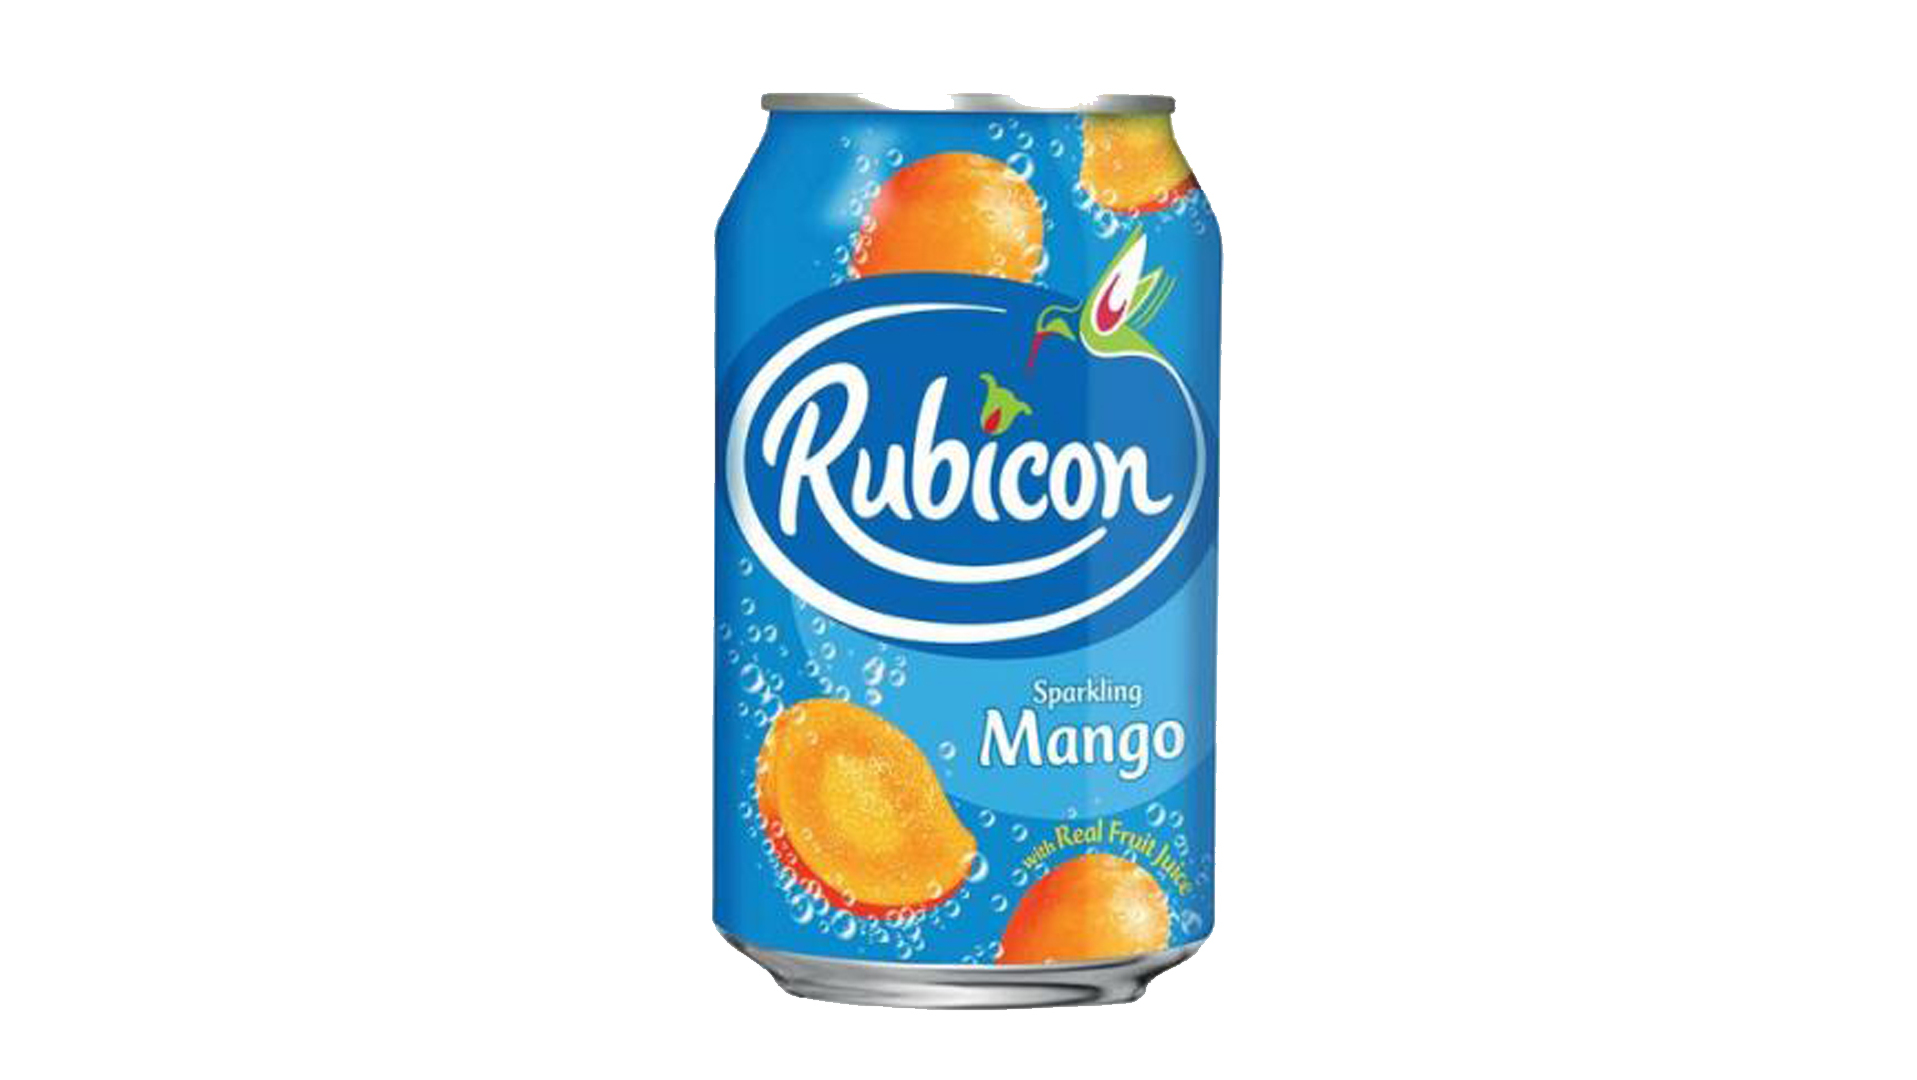 Rubicon Mango - Best Delivery in Manor Park E12